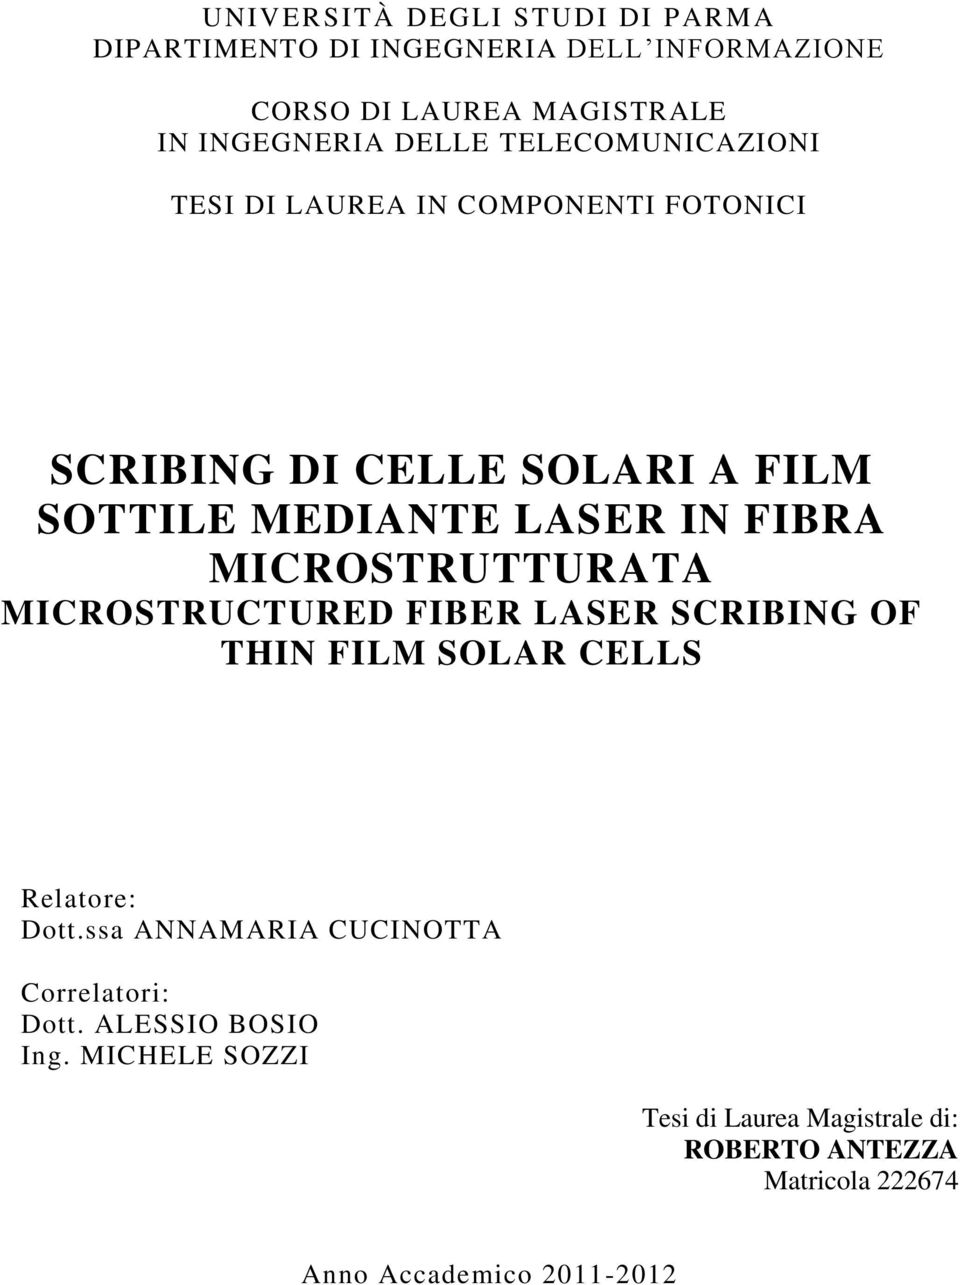 MICROSTRUTTURATA MICROSTRUCTURED FIBER LASER SCRIBING OF THIN FILM SOLAR CELLS Relatore: Dott.